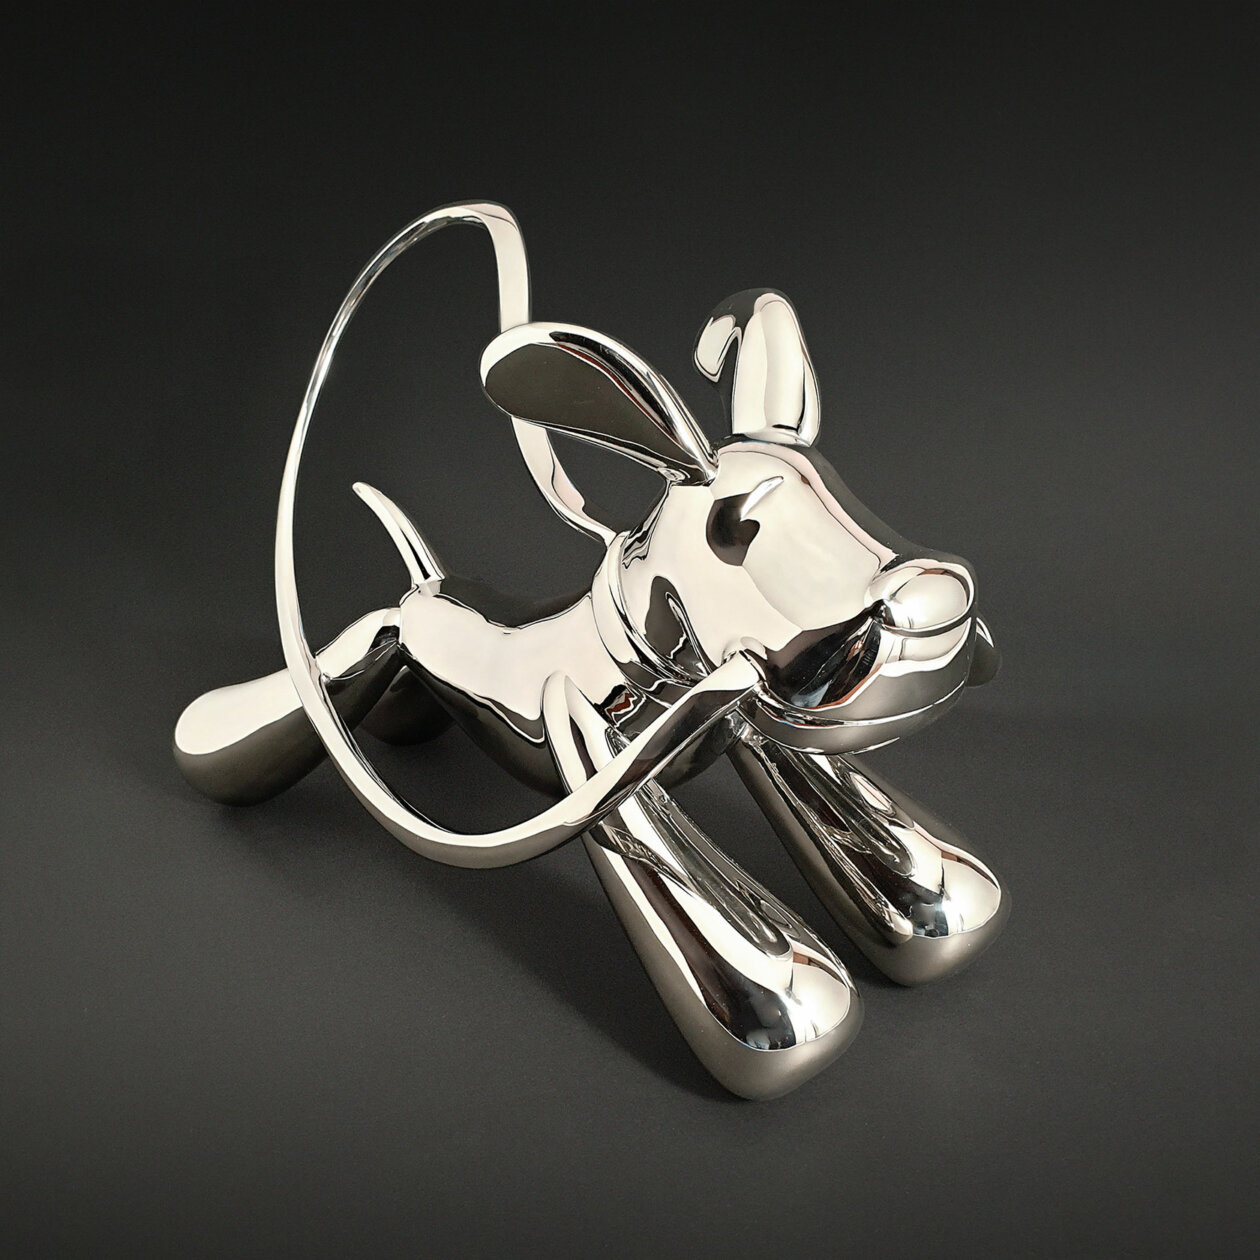 Fun Animal Polished Metal Sculptures By Ferdi B. Dick (16)